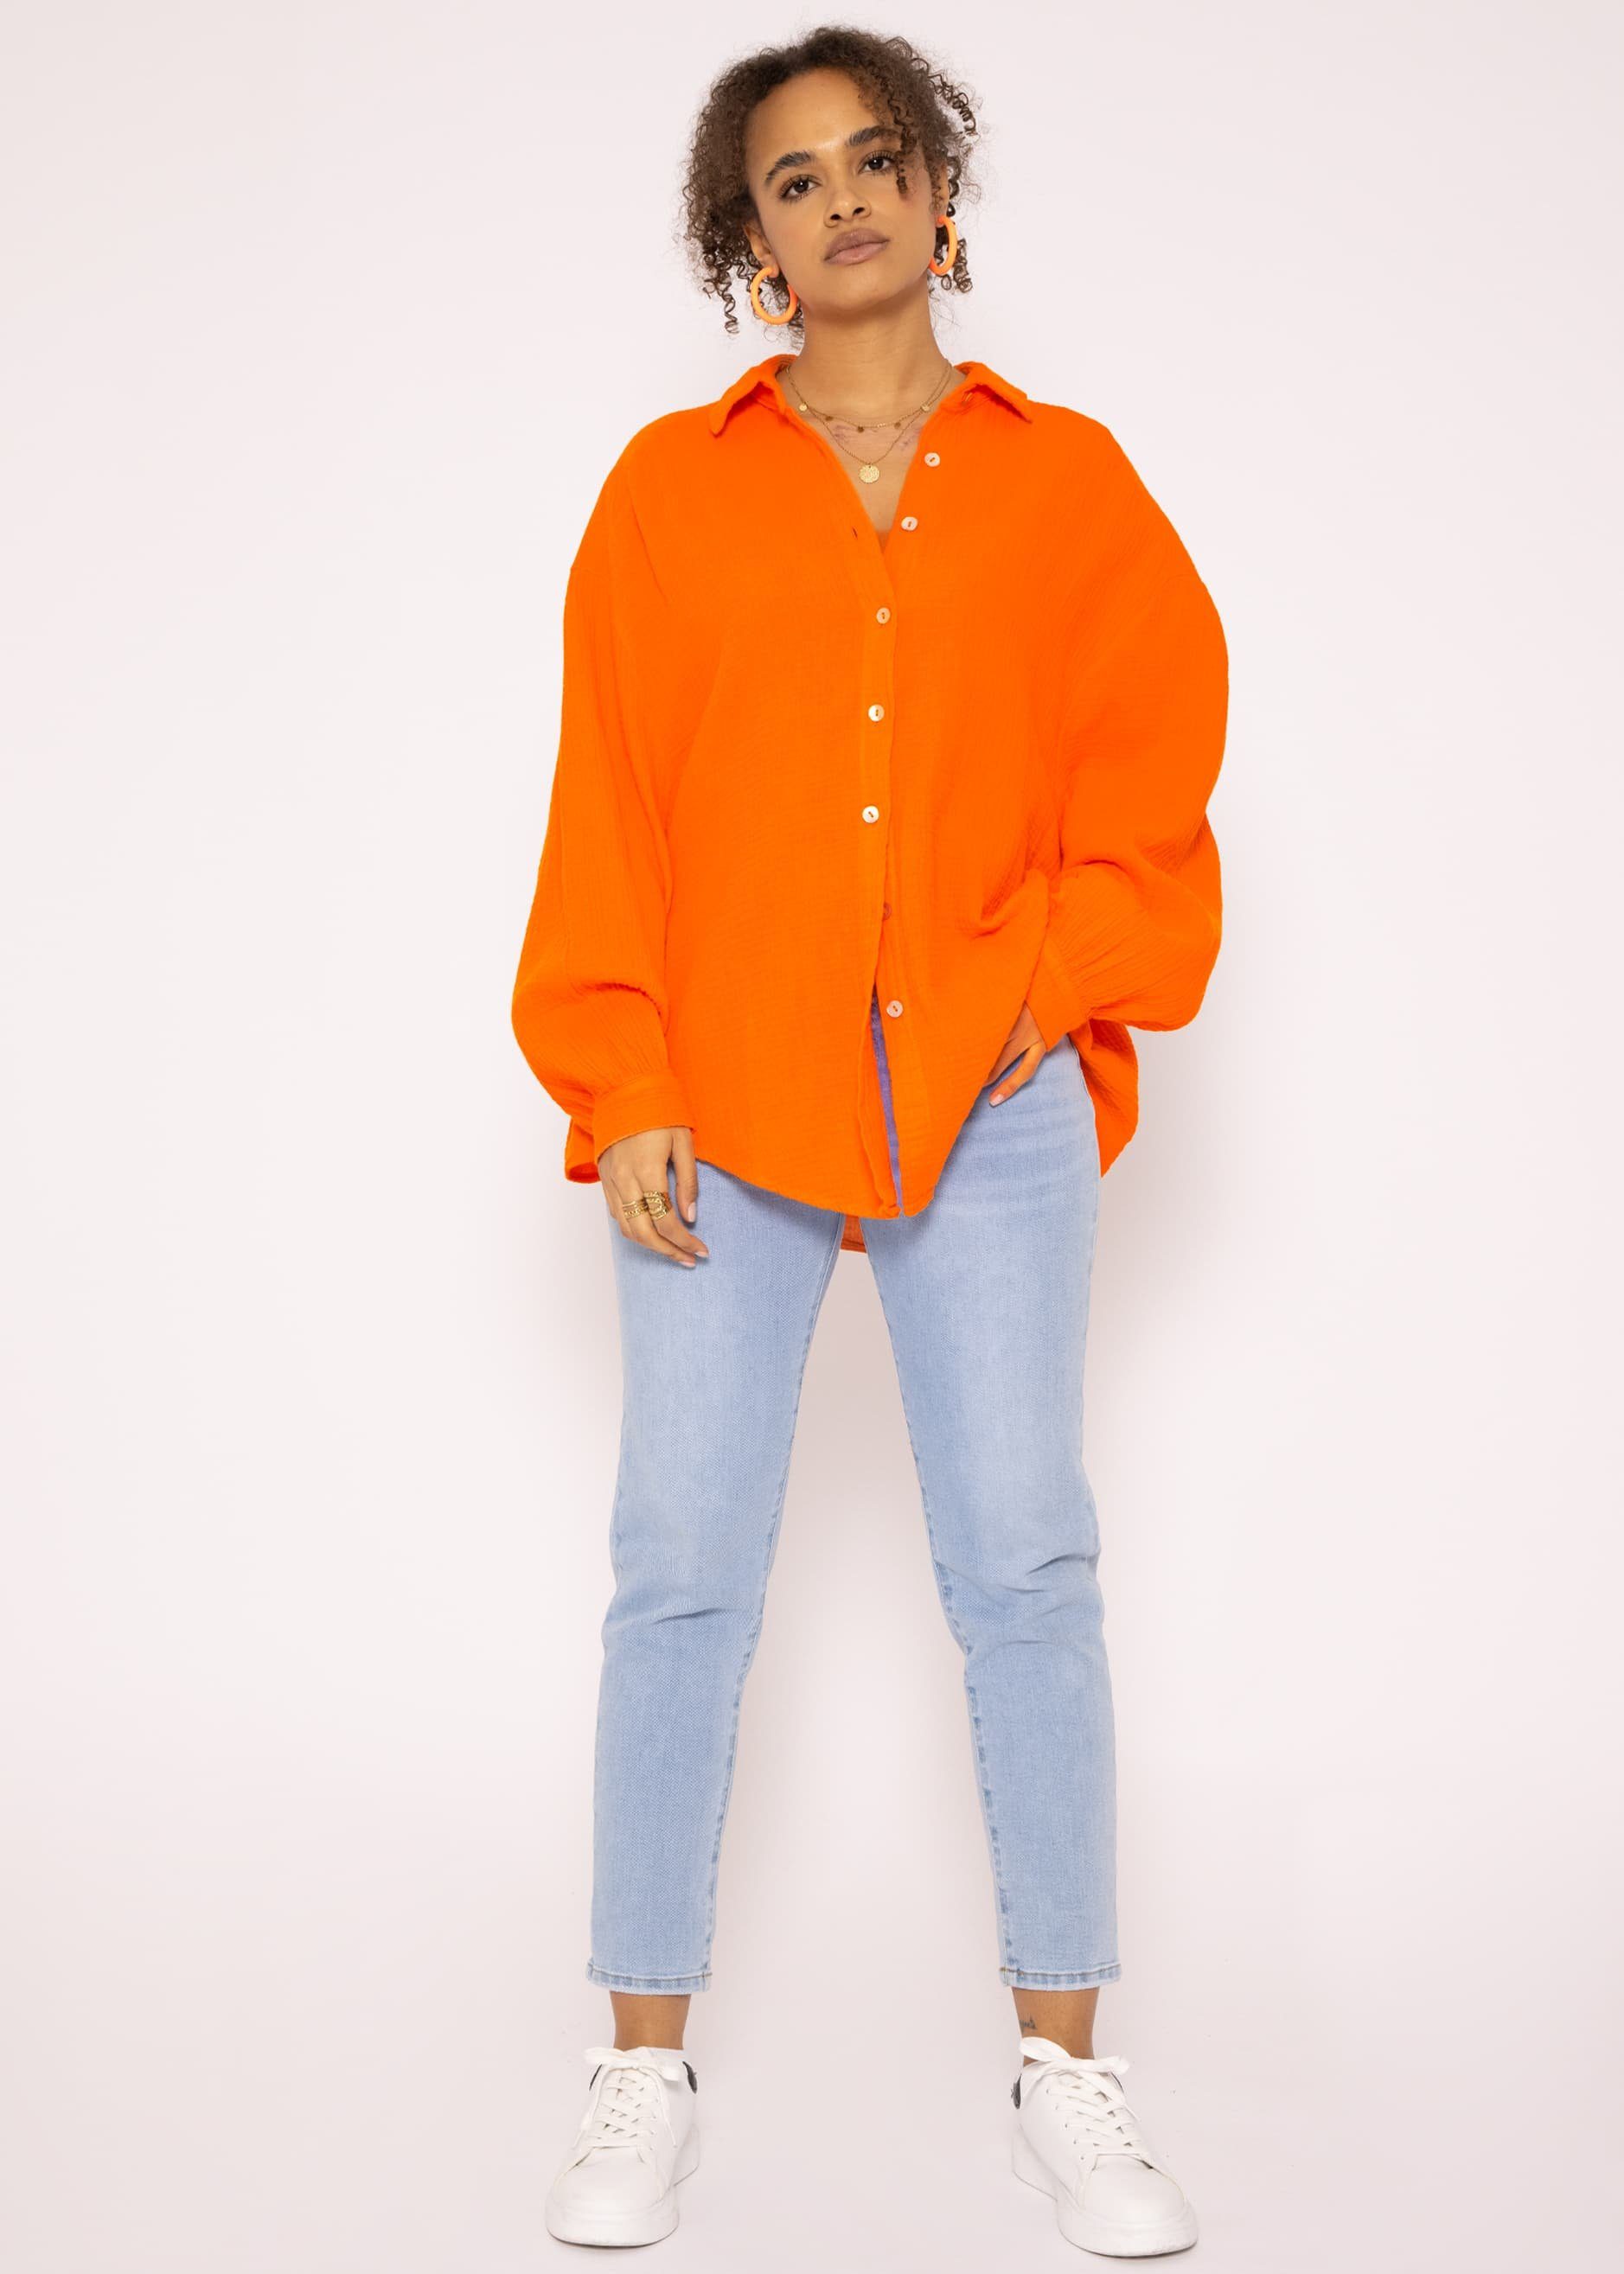 Langarm aus Hemdbluse Musselin Damen (Gr. Size 36-48) V-Ausschnitt, Longbluse lang Orange mit One Bluse Baumwolle SASSYCLASSY Oversize